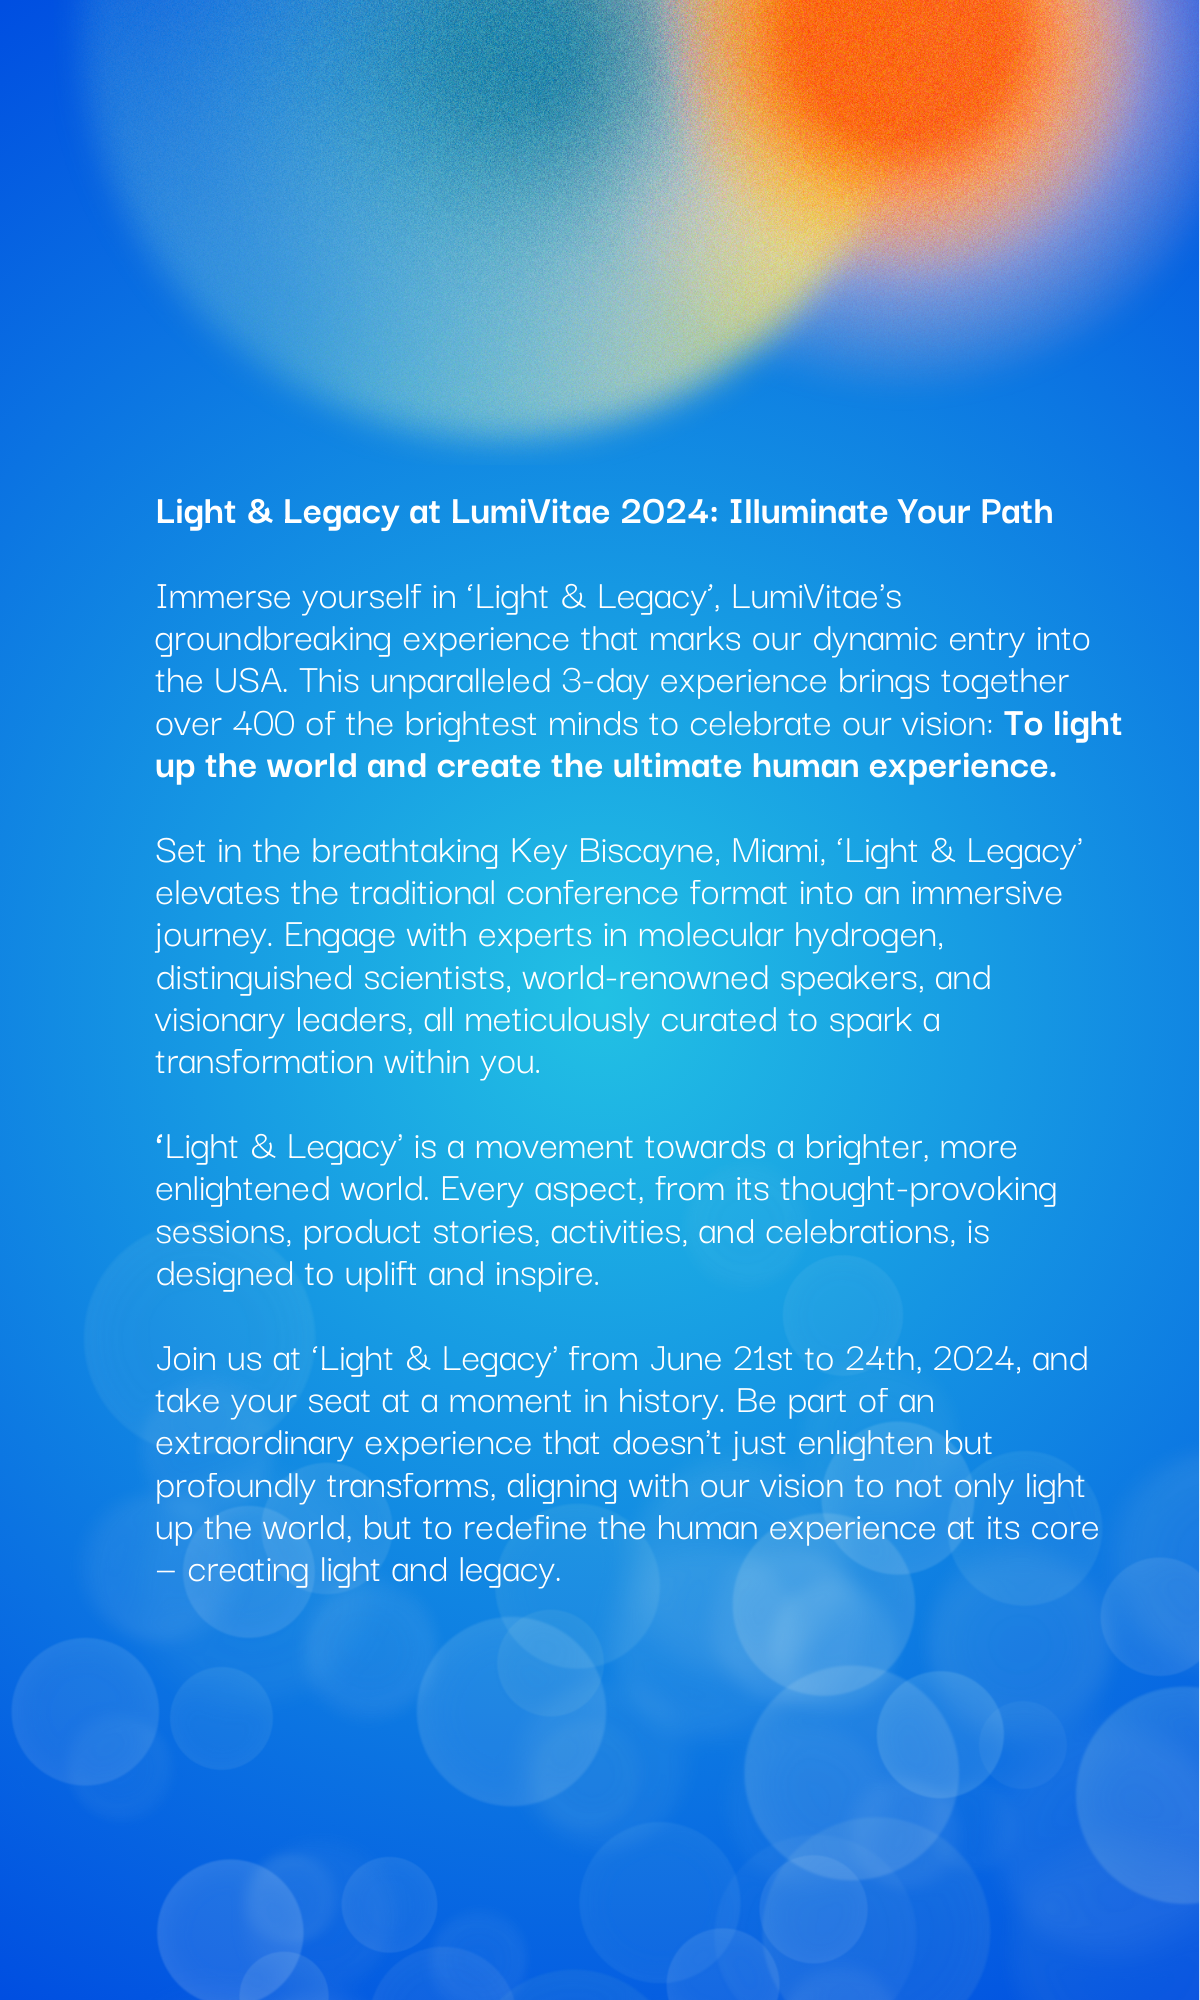 LumiVitae Event Ticket: Light & Legacy